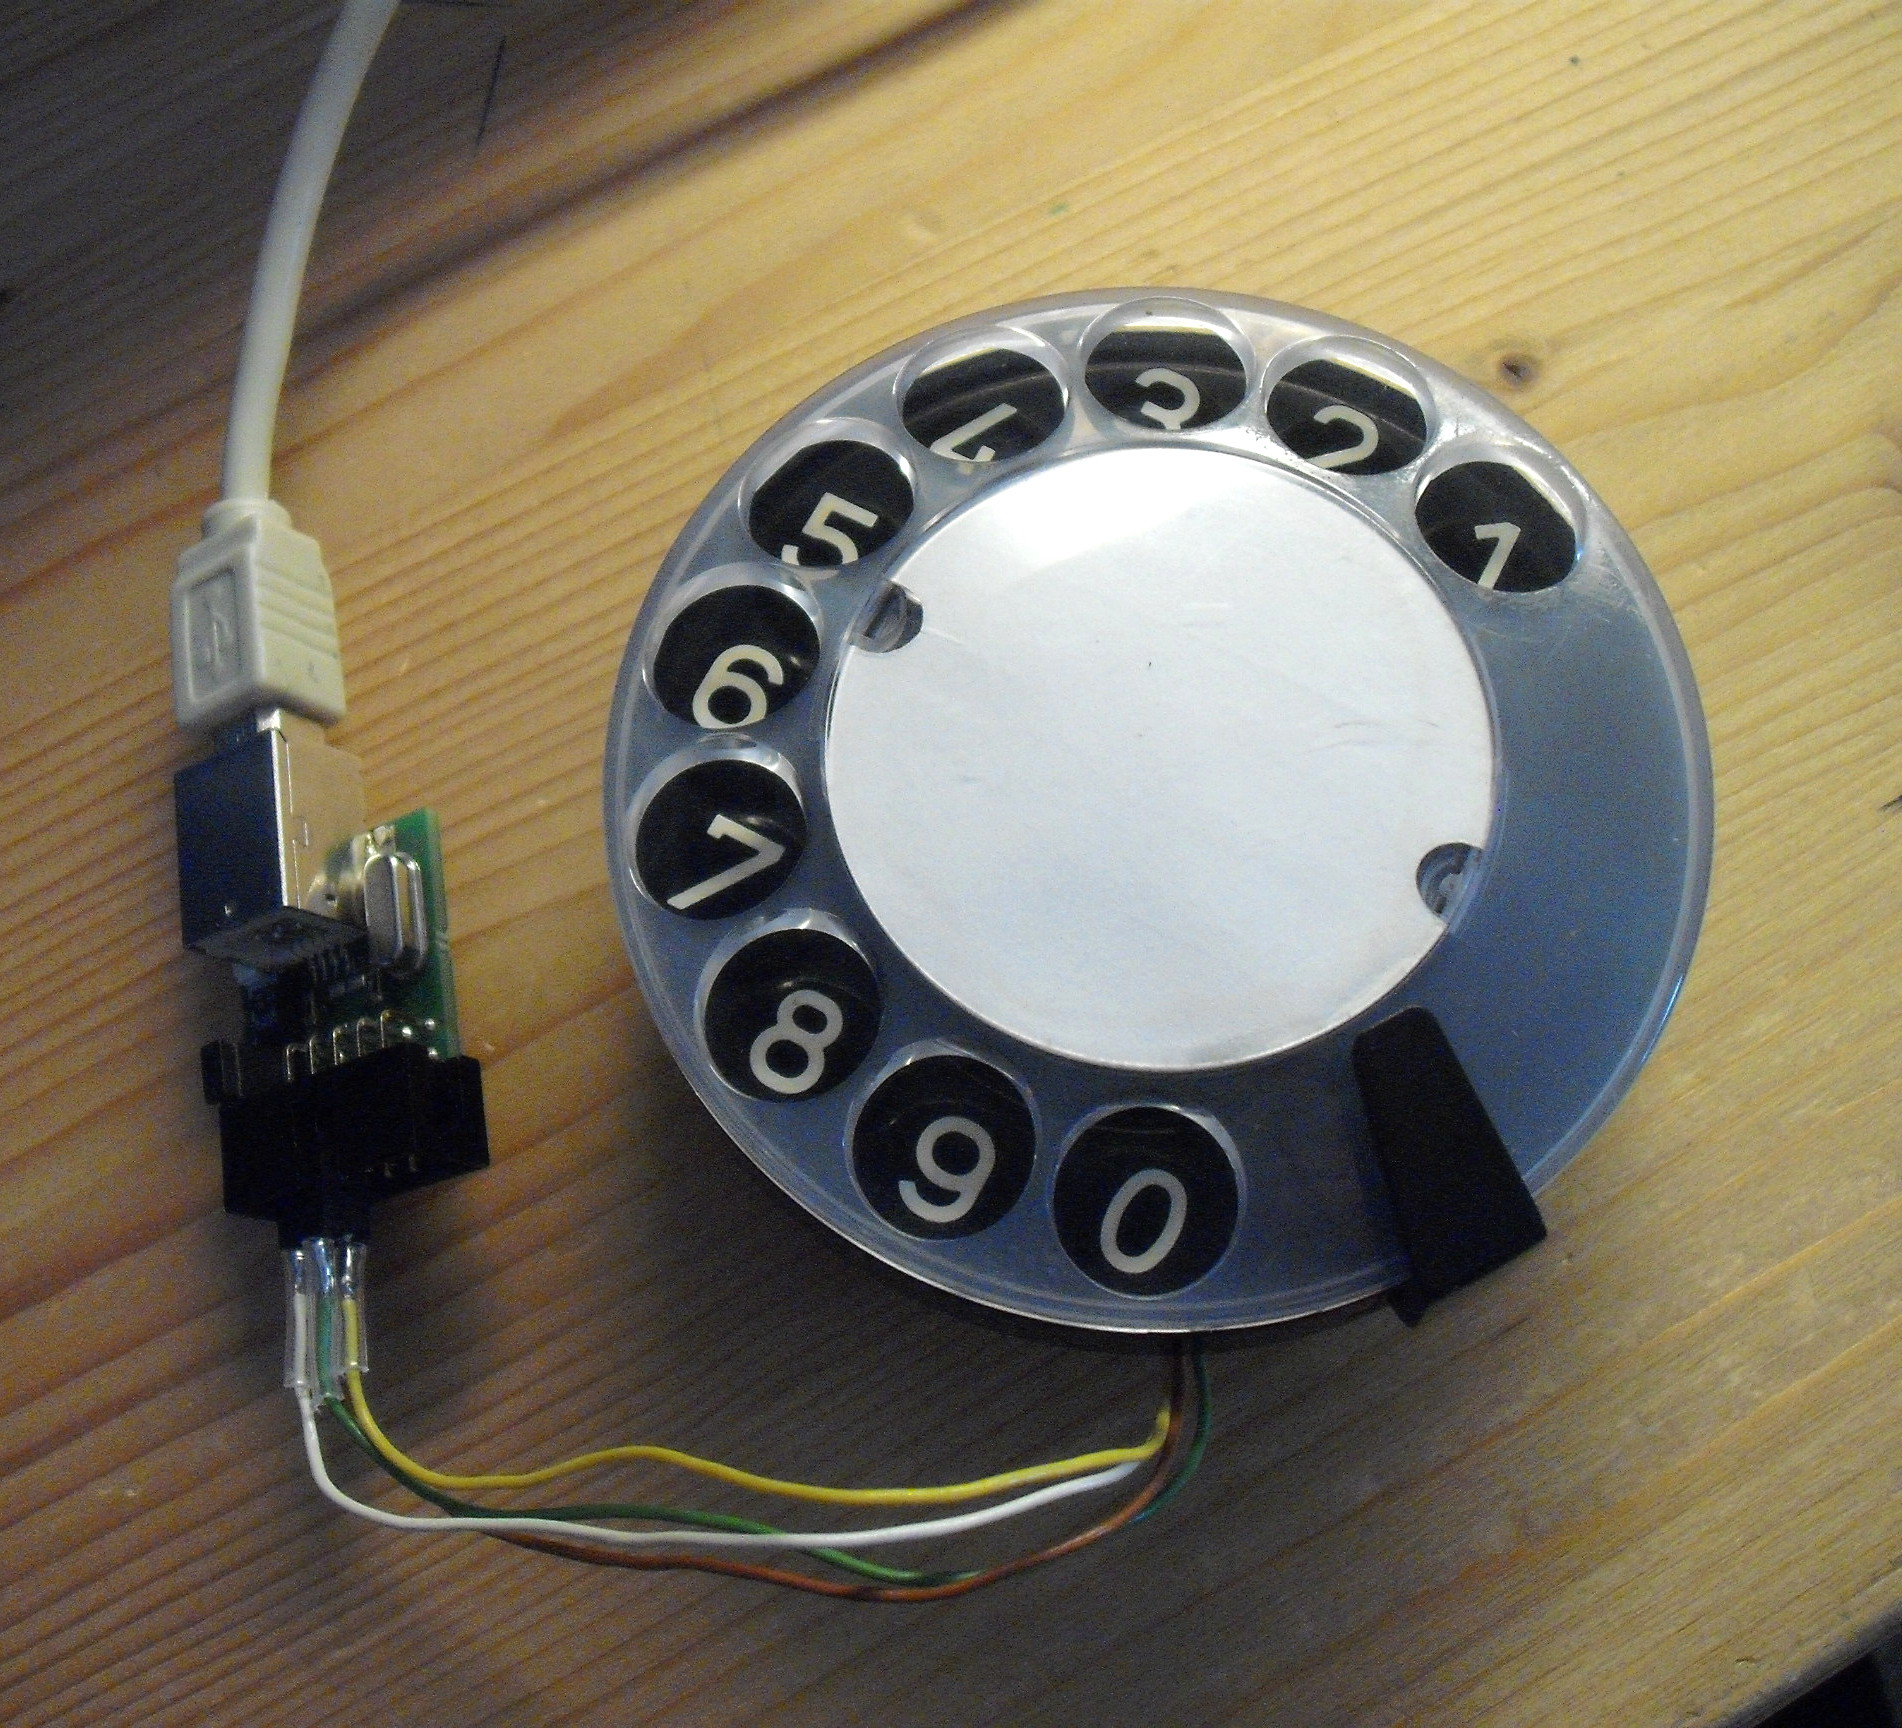 USB Rotary Dial